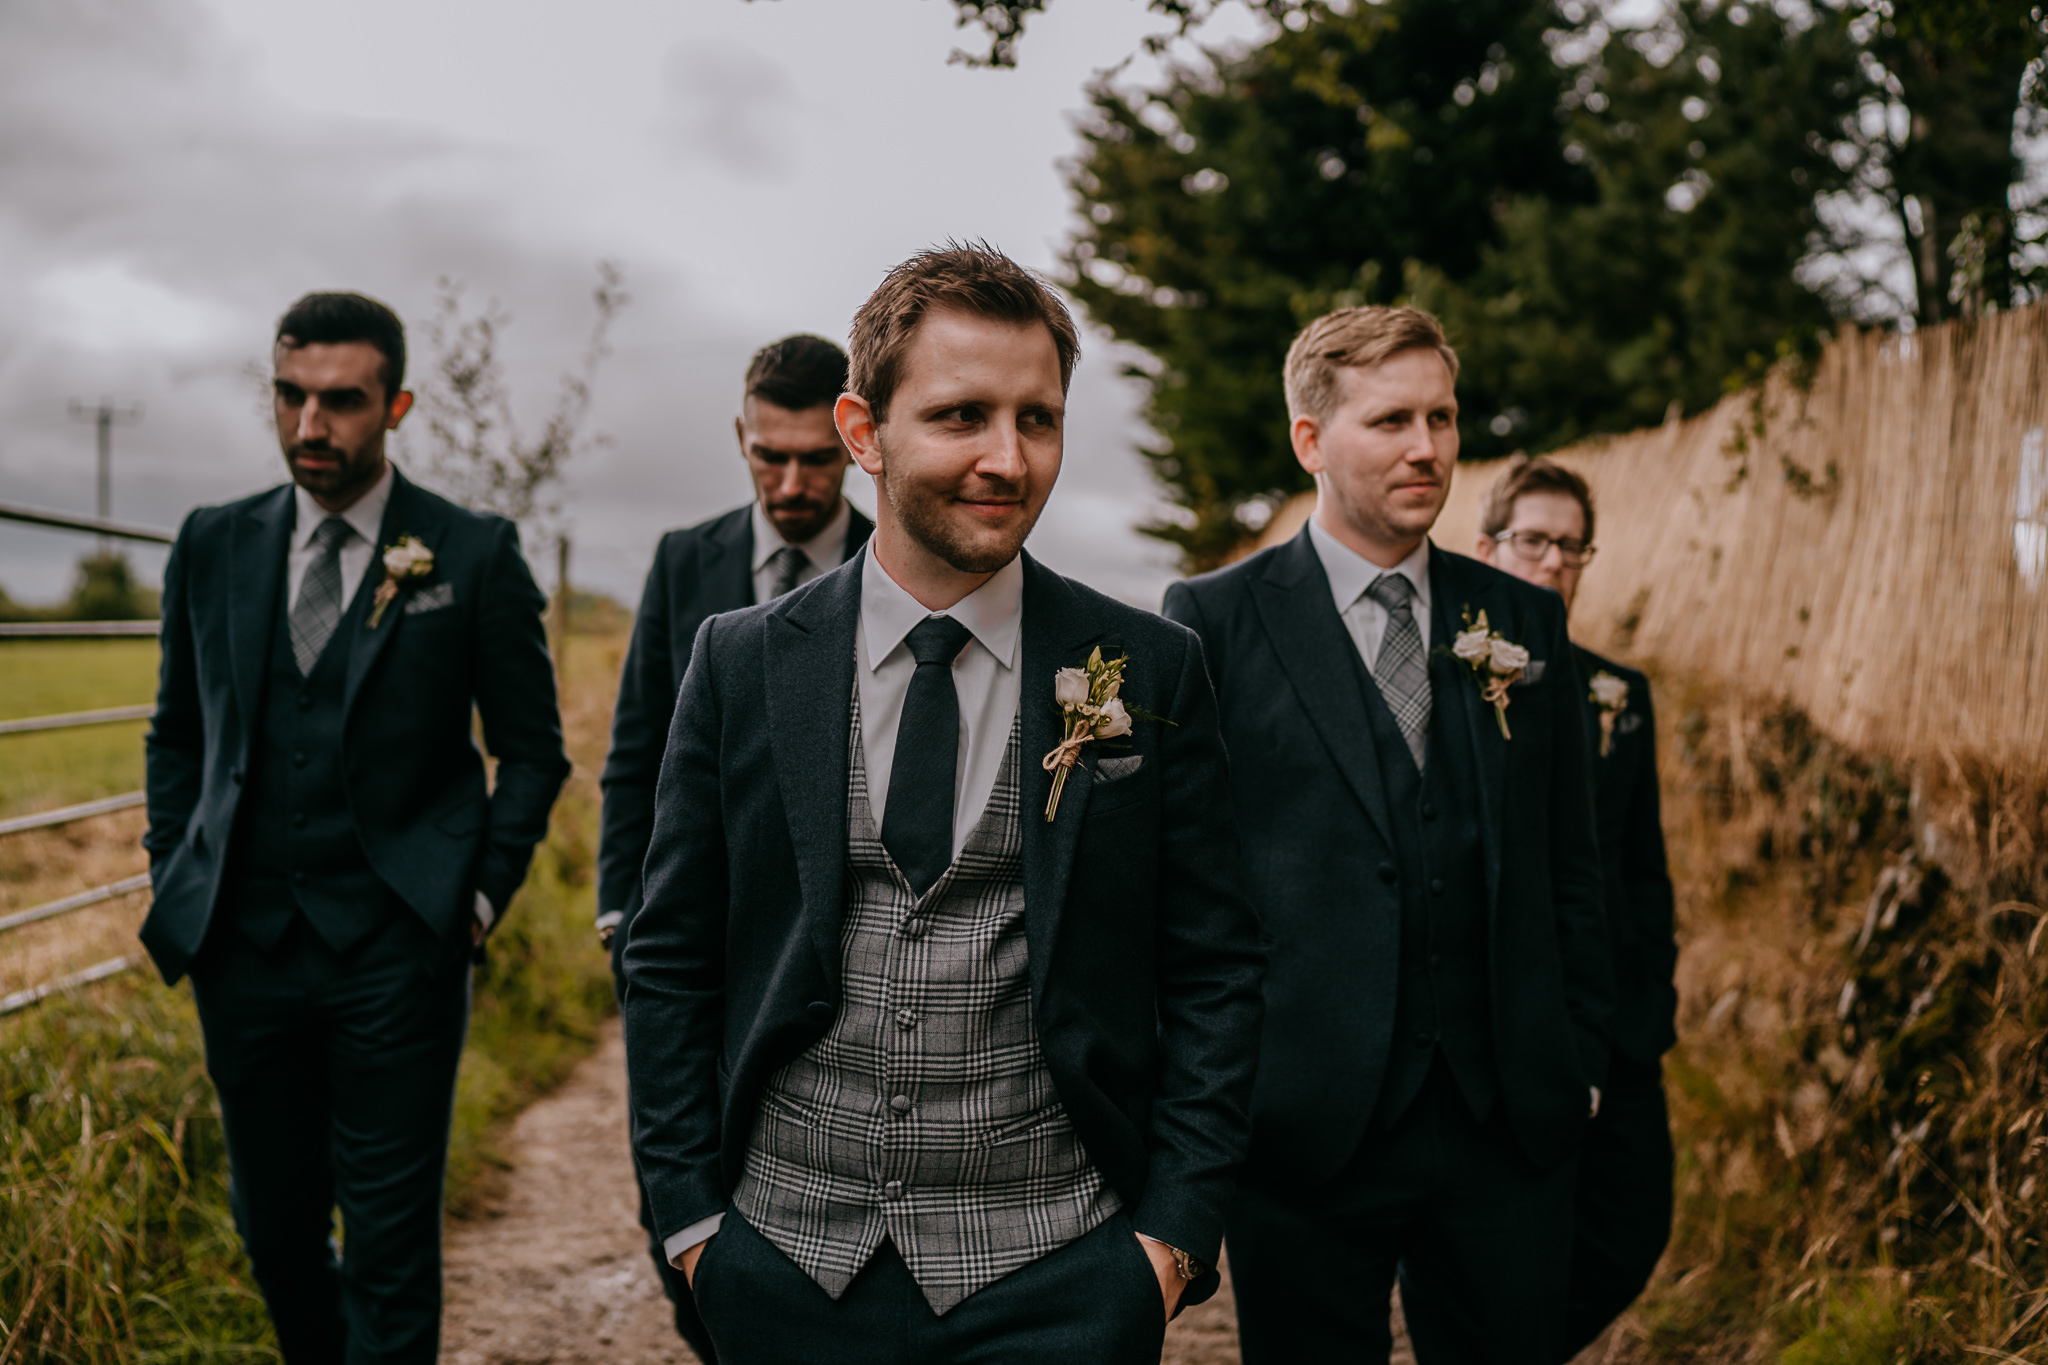 Northern-Ireland-wedding-photographers-the-martins-outdoor-barn-wedding-117.jpg